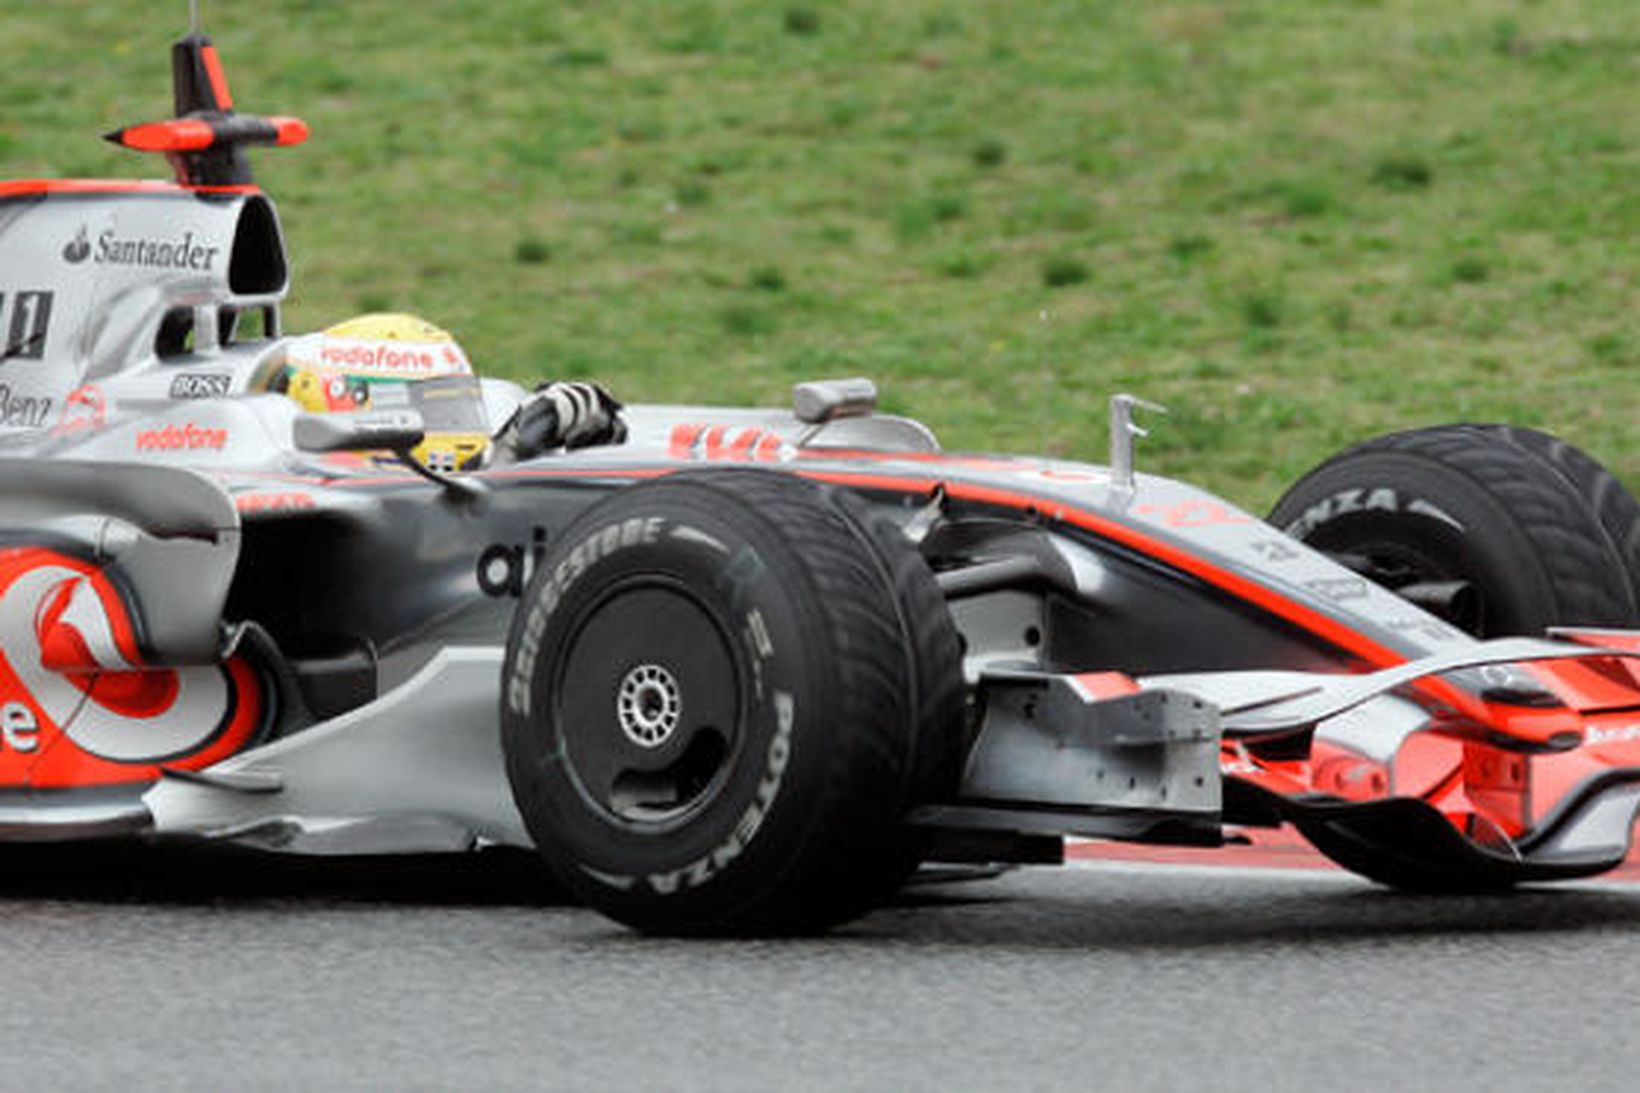 Hamilton á McLarenbílnum í Barcelona í dag.